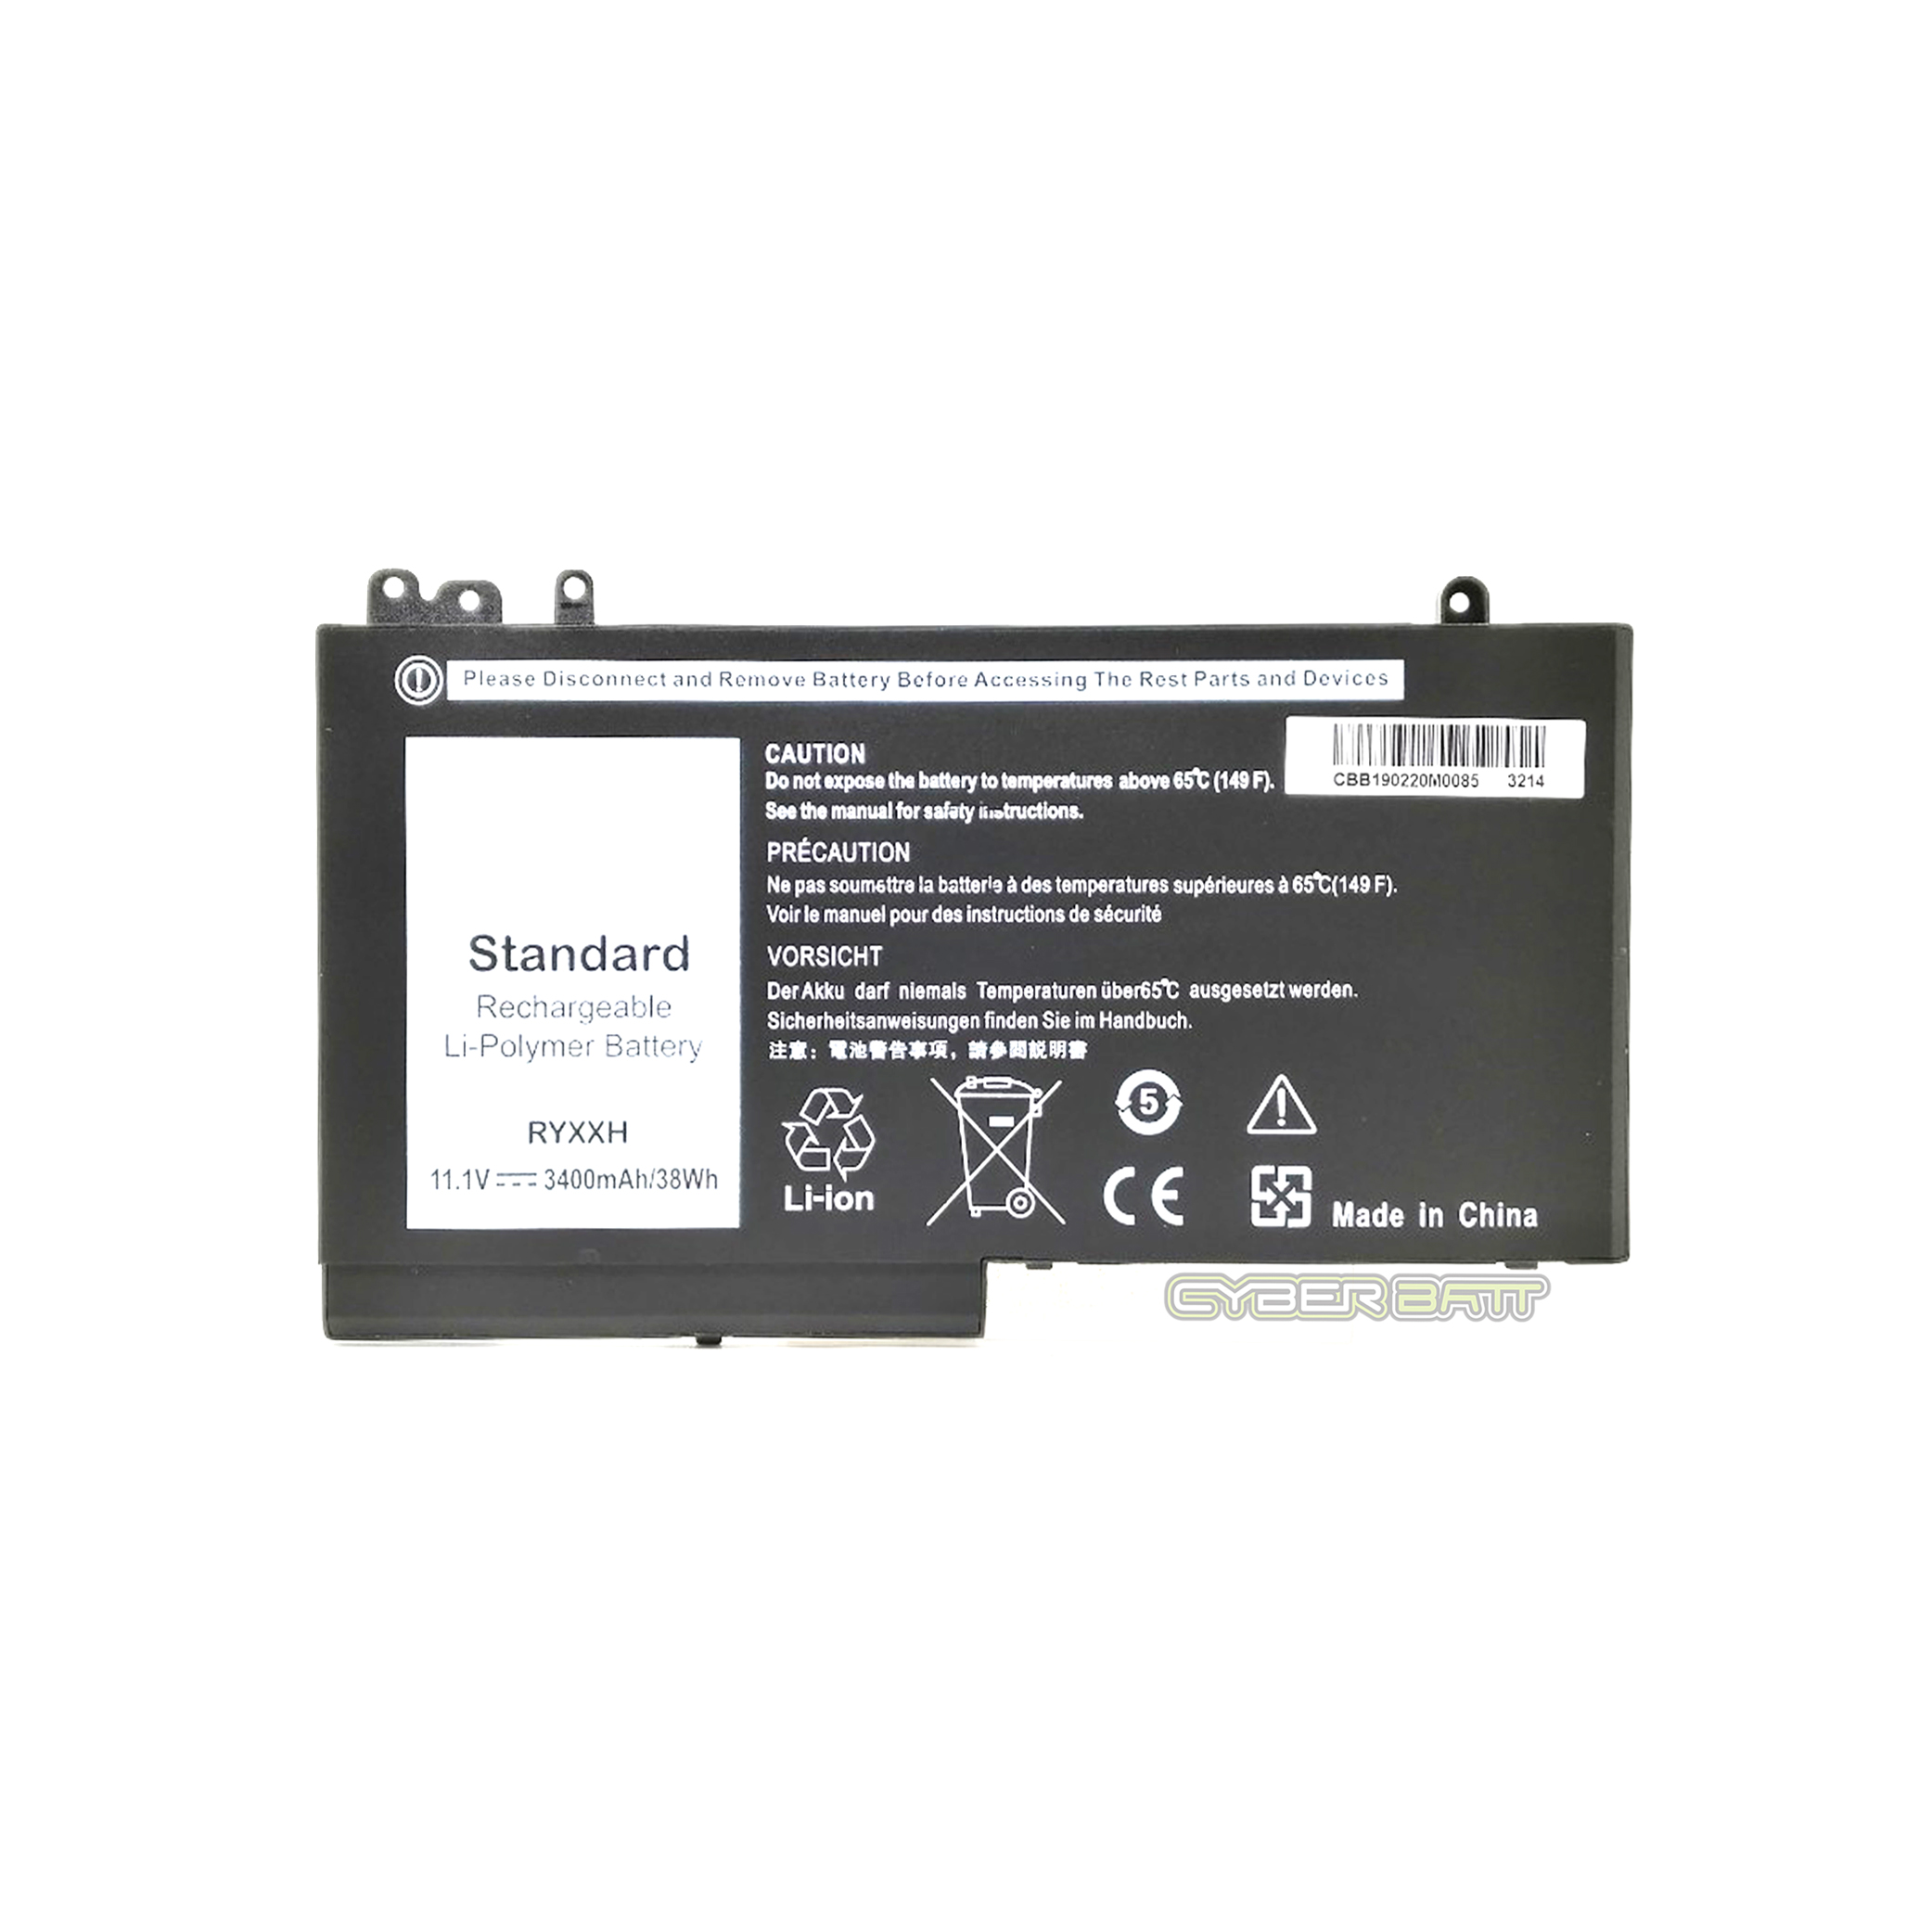 Battery Dell Latitude E5550 RYXXH : 11.1V-3400mAh/38Wh Black (OEM)